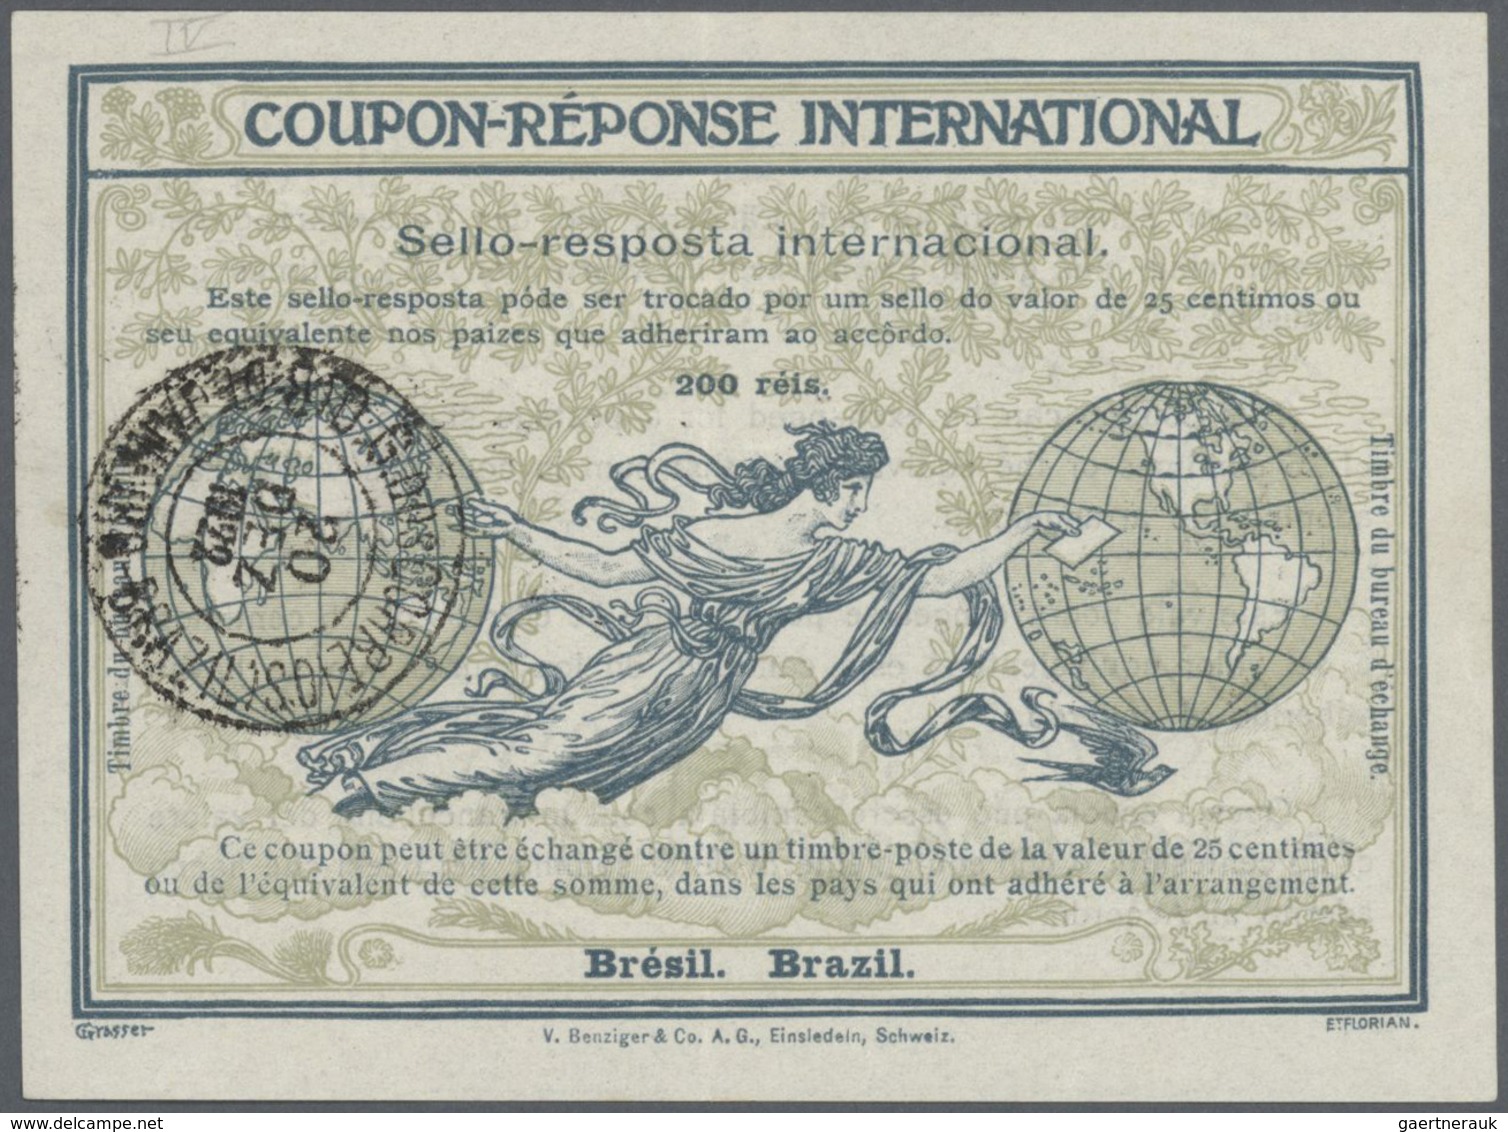 Alle Welt: 1907 onwards - INTERNATIONAL REPLY COUPONS (Internationale Antwortscheine): Specialized a